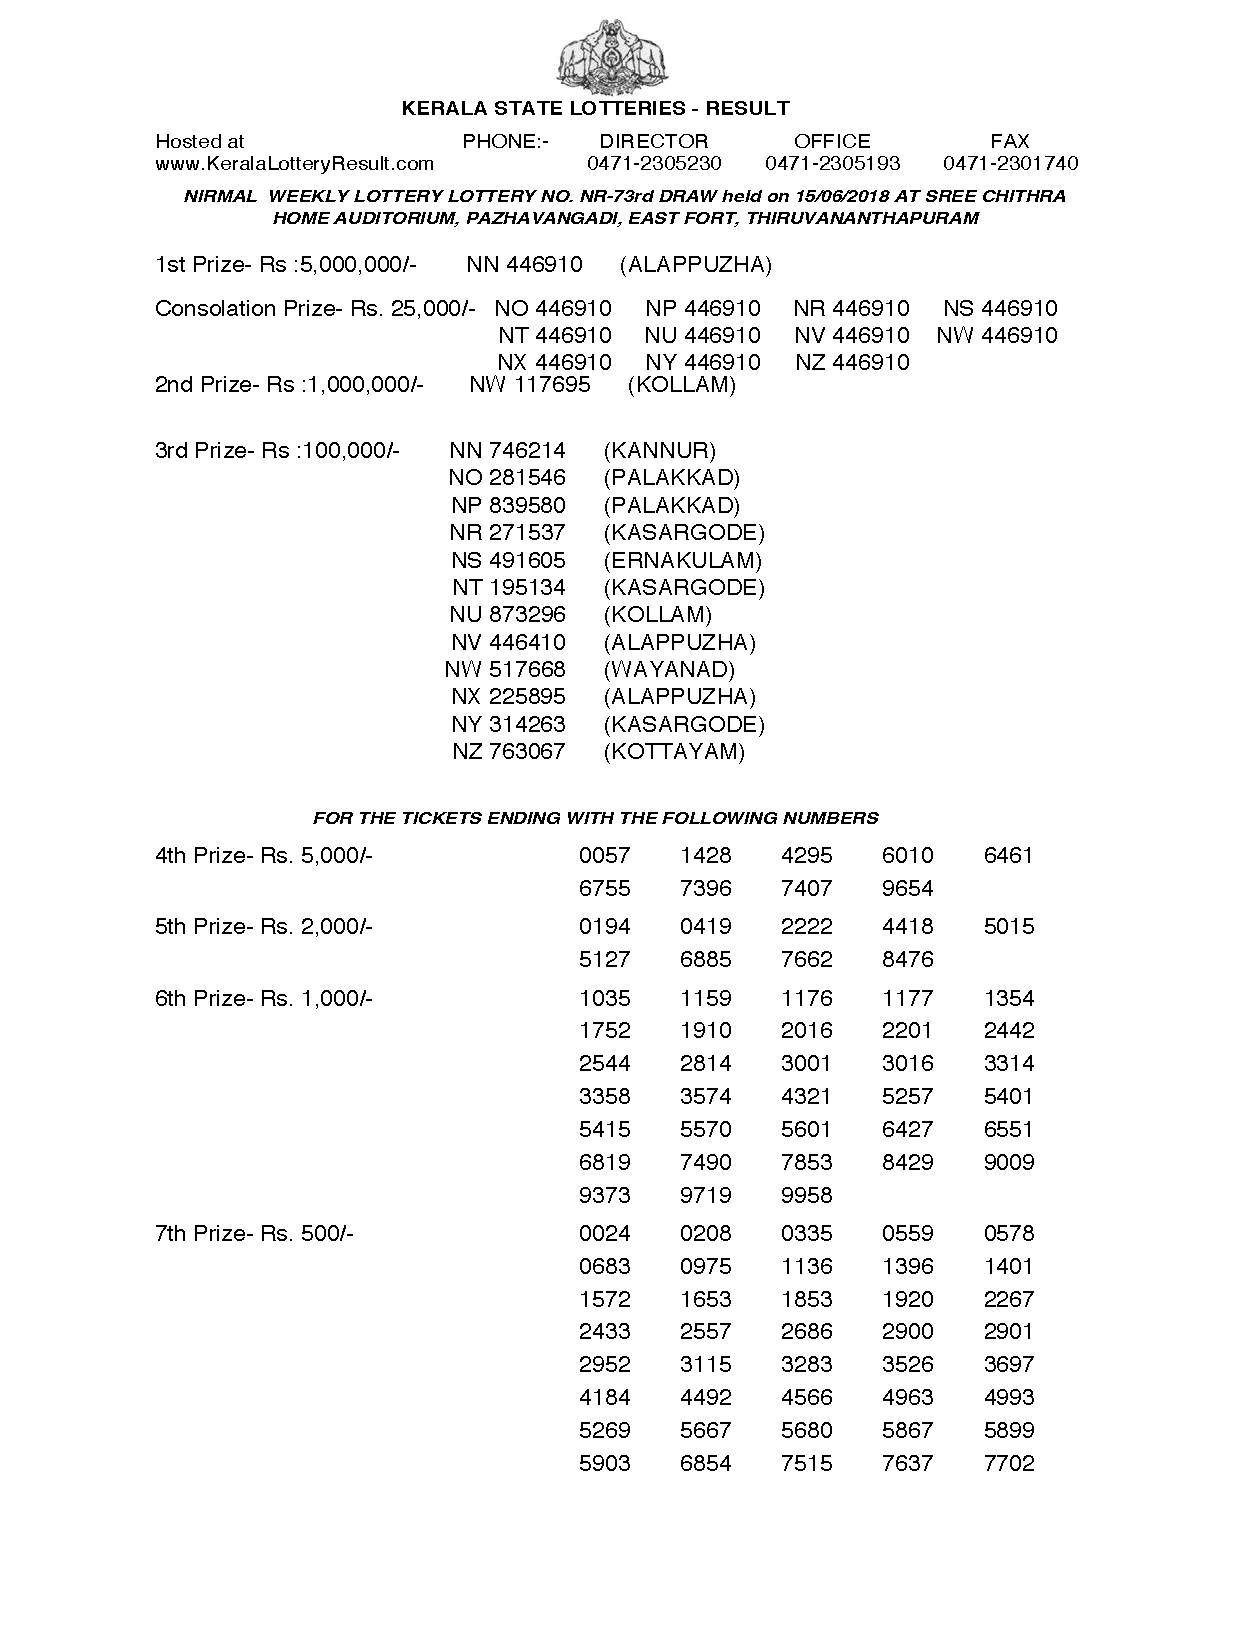 Nirmal NR73 Kerala Lottery Results Screenshot: Page 1